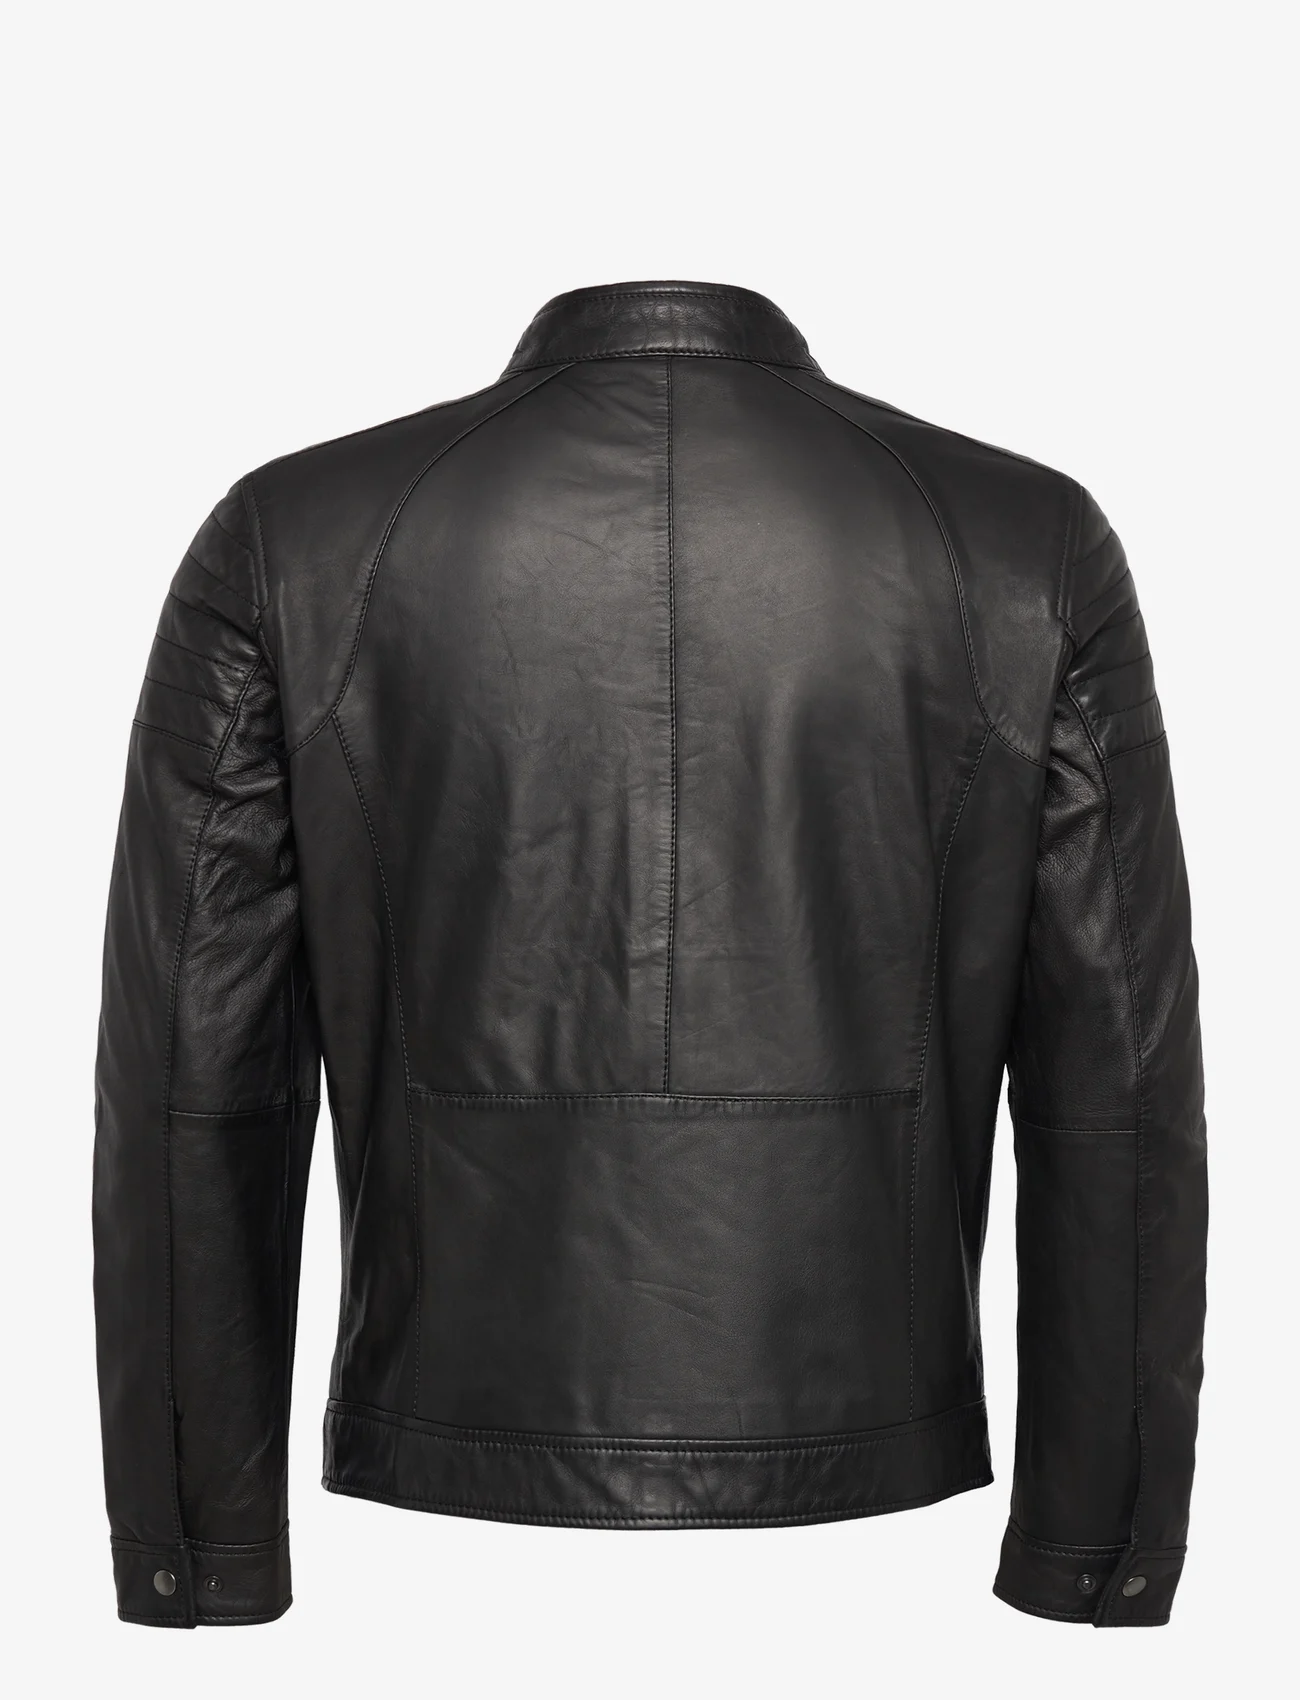 Jofama - Costner Zipped Leather Jacket - lentejassen - black - 1